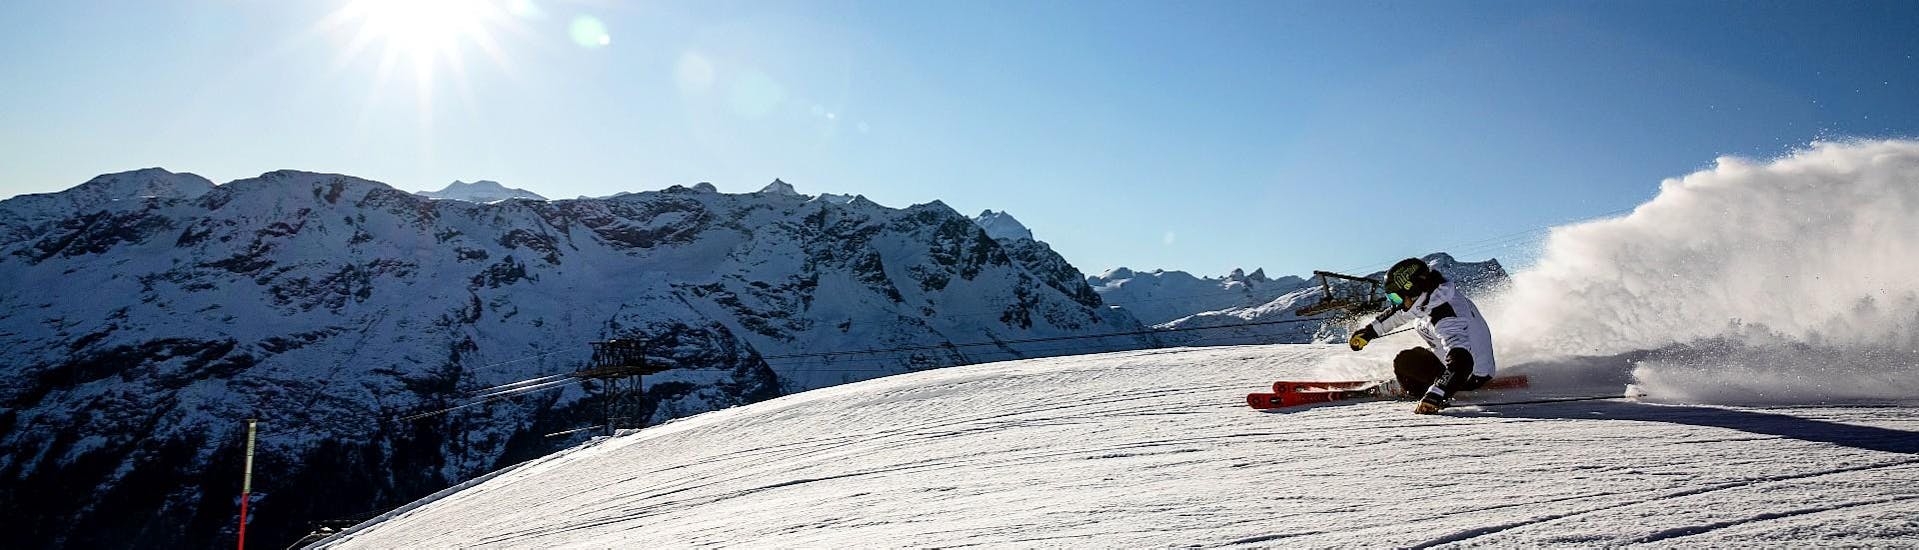 private-ski-lessons-for-adults-of-all-levels-giorgio-rocca-ski-academy-stmoritz-hero